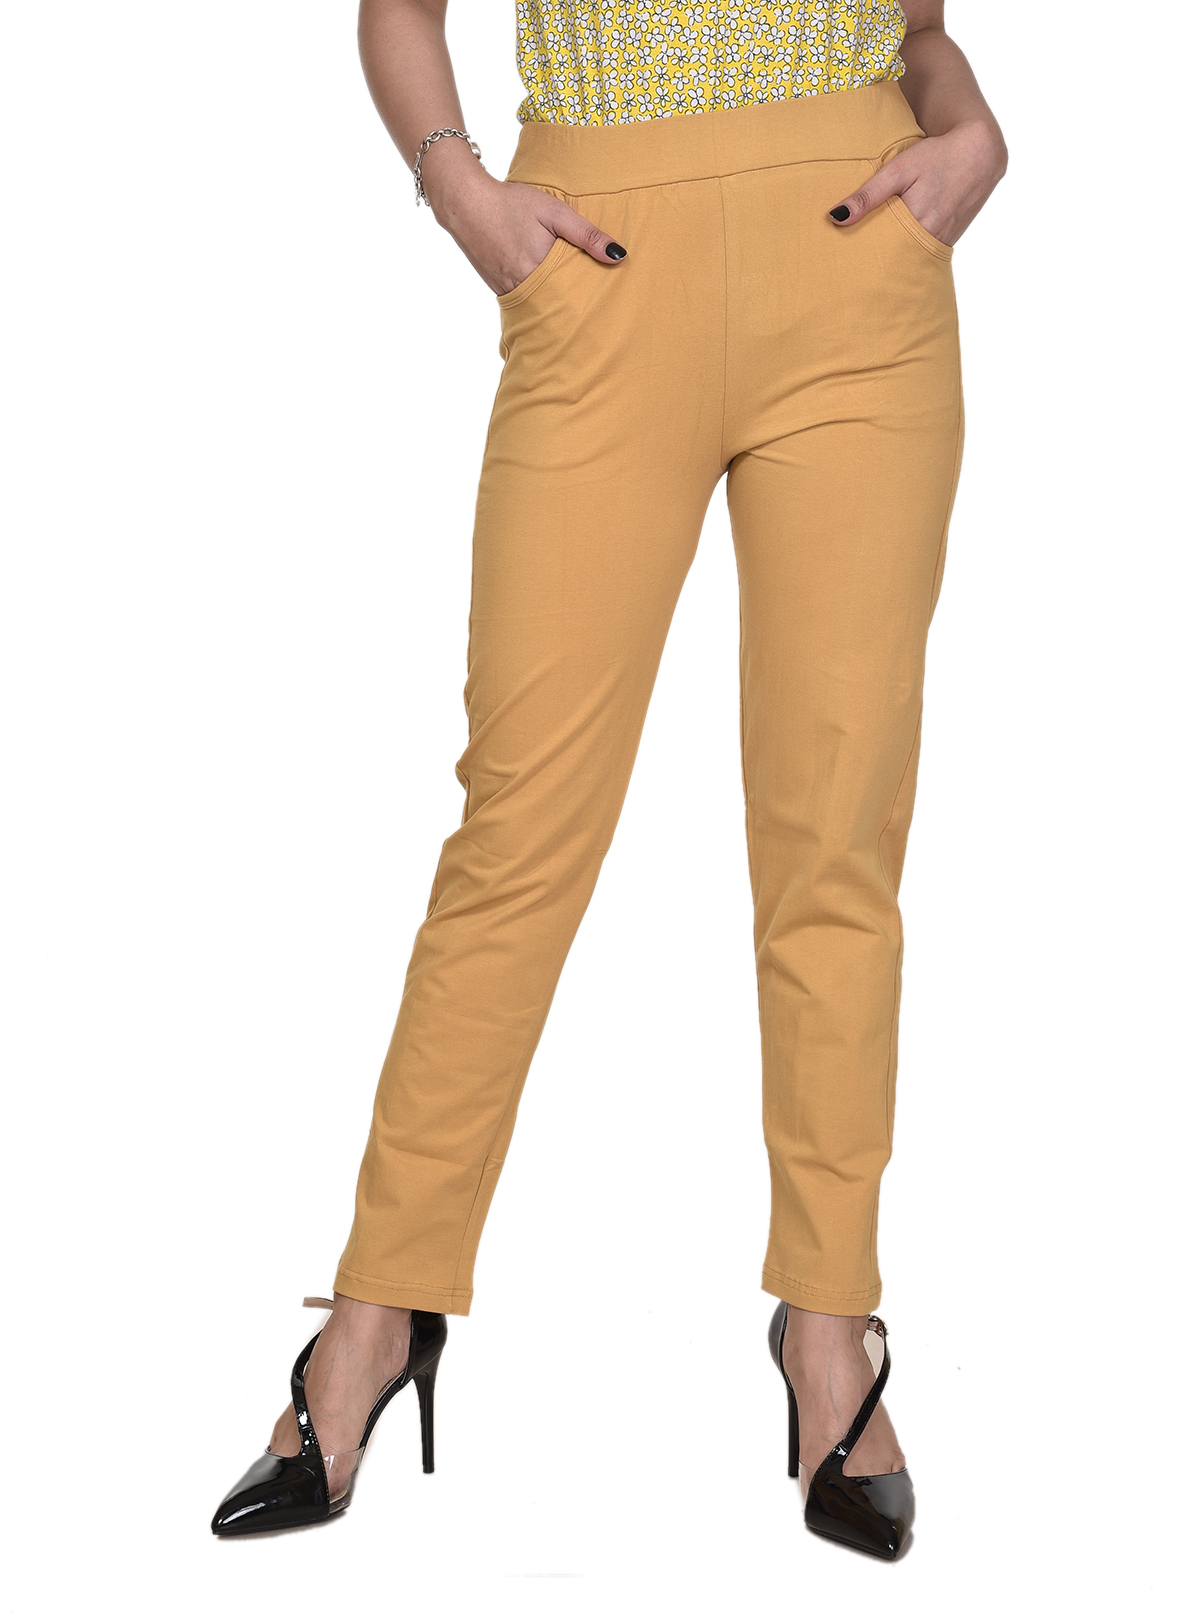 branded cotton trouserscotton pants for menformal pantswholesale  marketcheap price trousers  YouTube